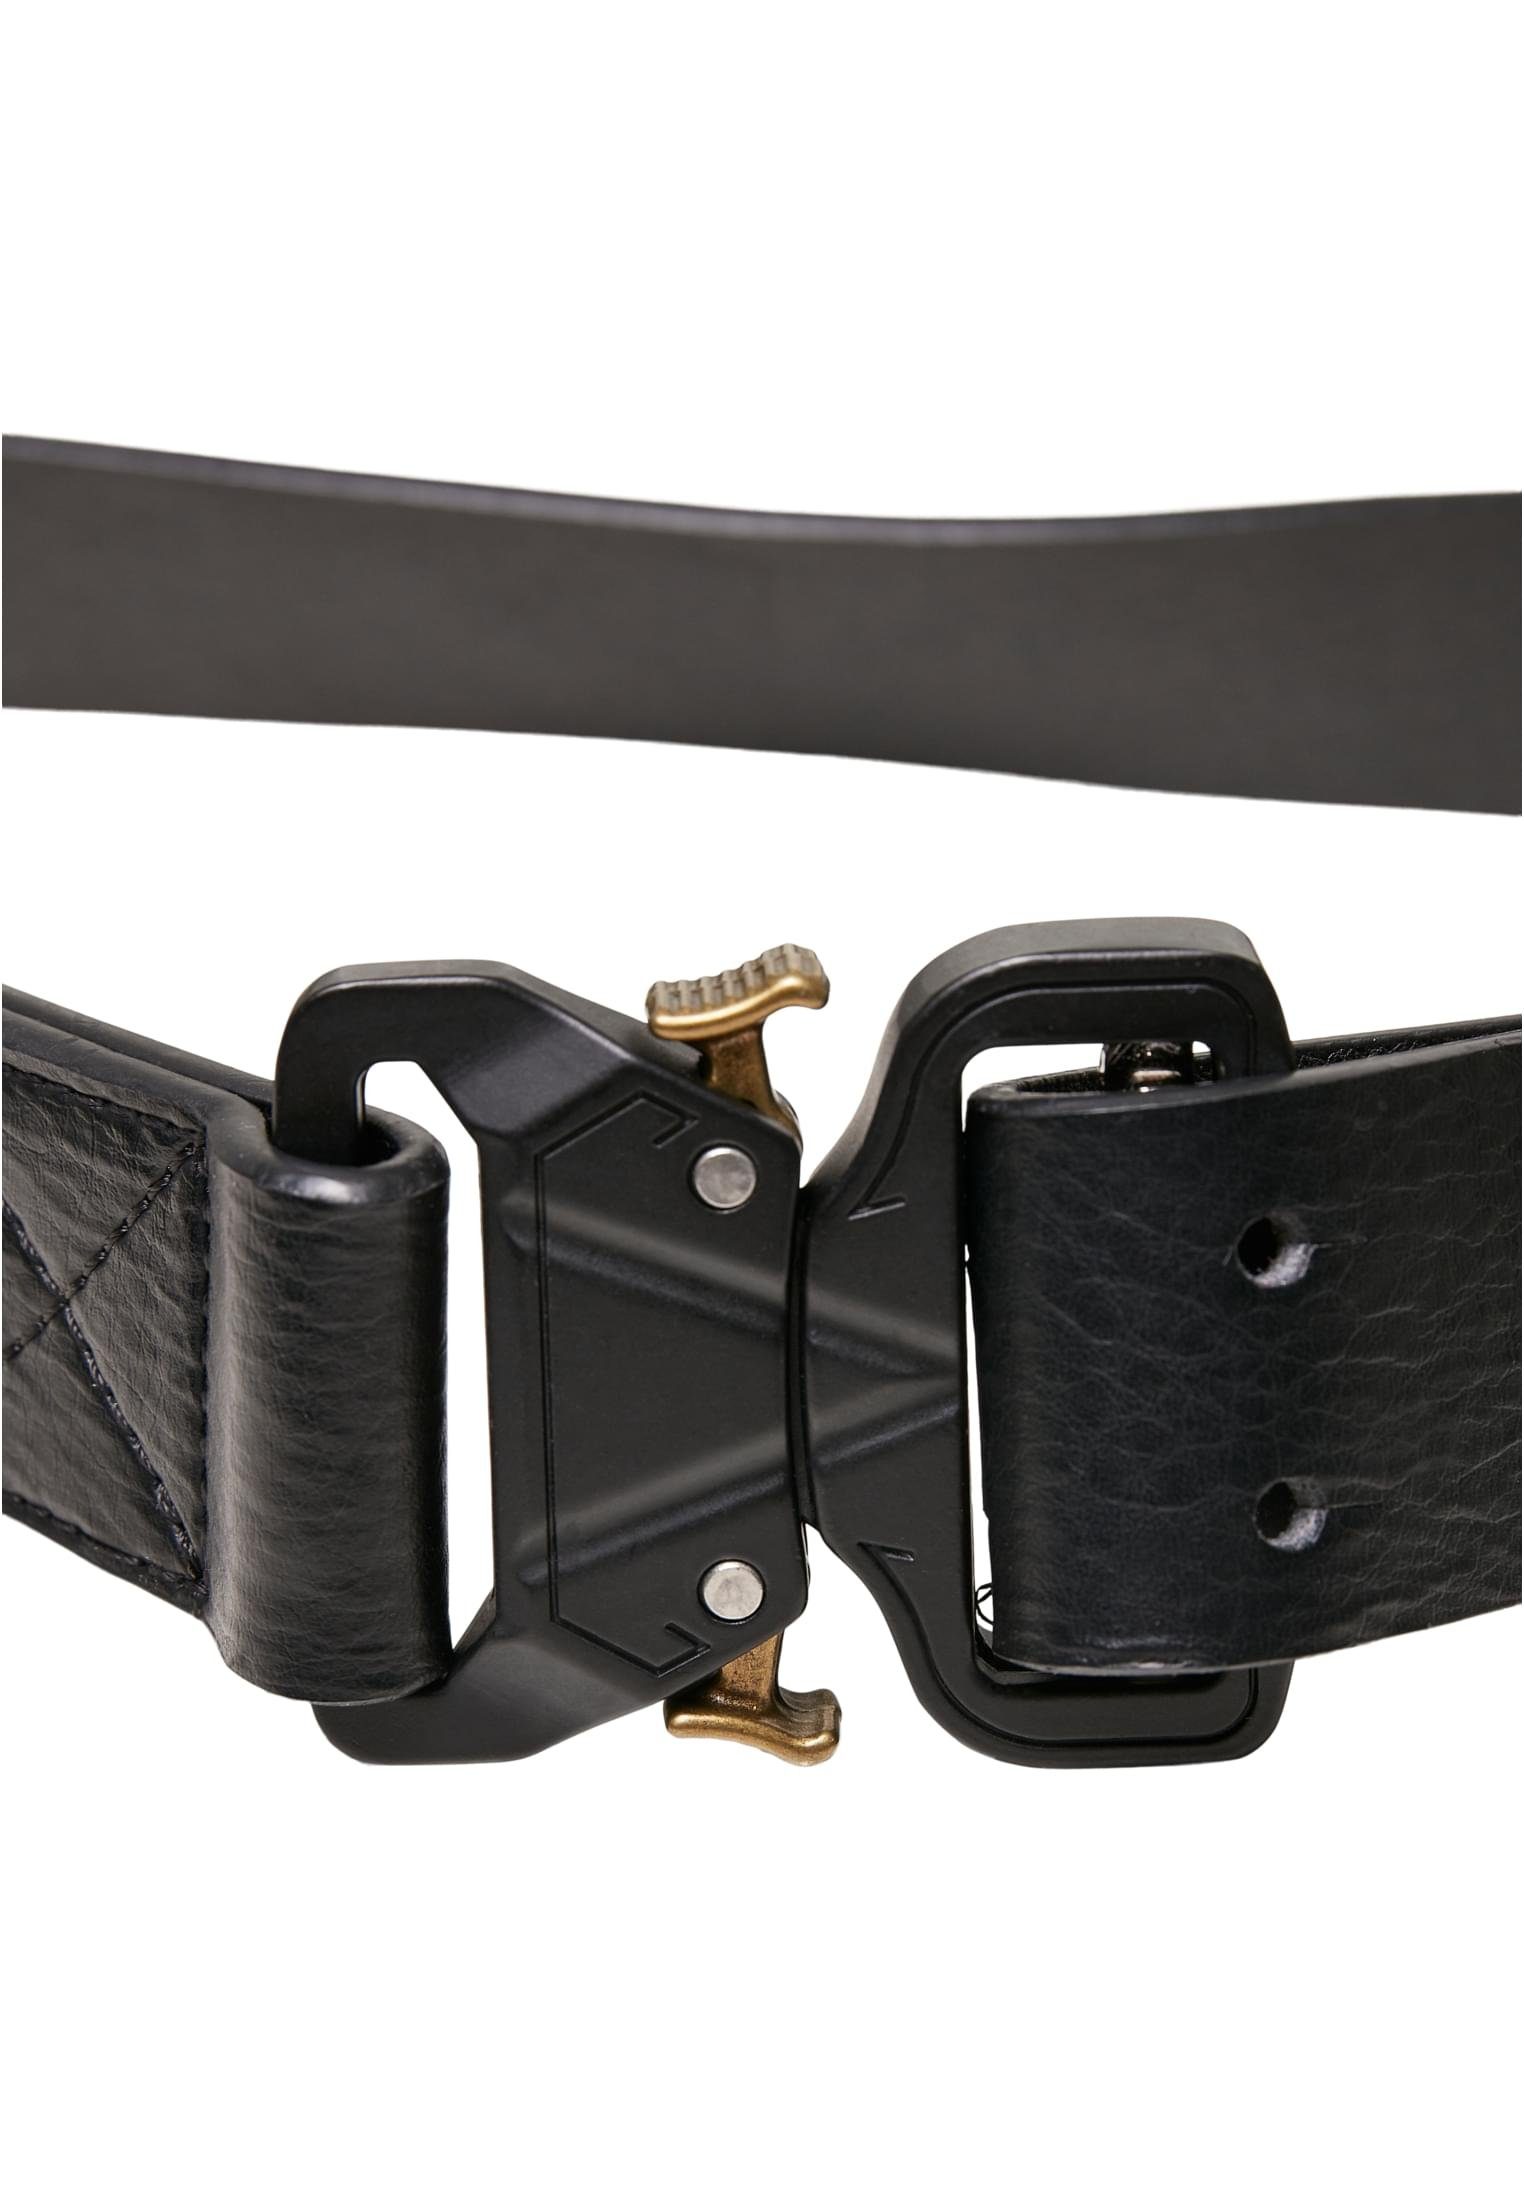 URBAN CLASSICS Hüftgürtel Accessories Accessoires Classics With Imitation Belt Hook, Urban Leather